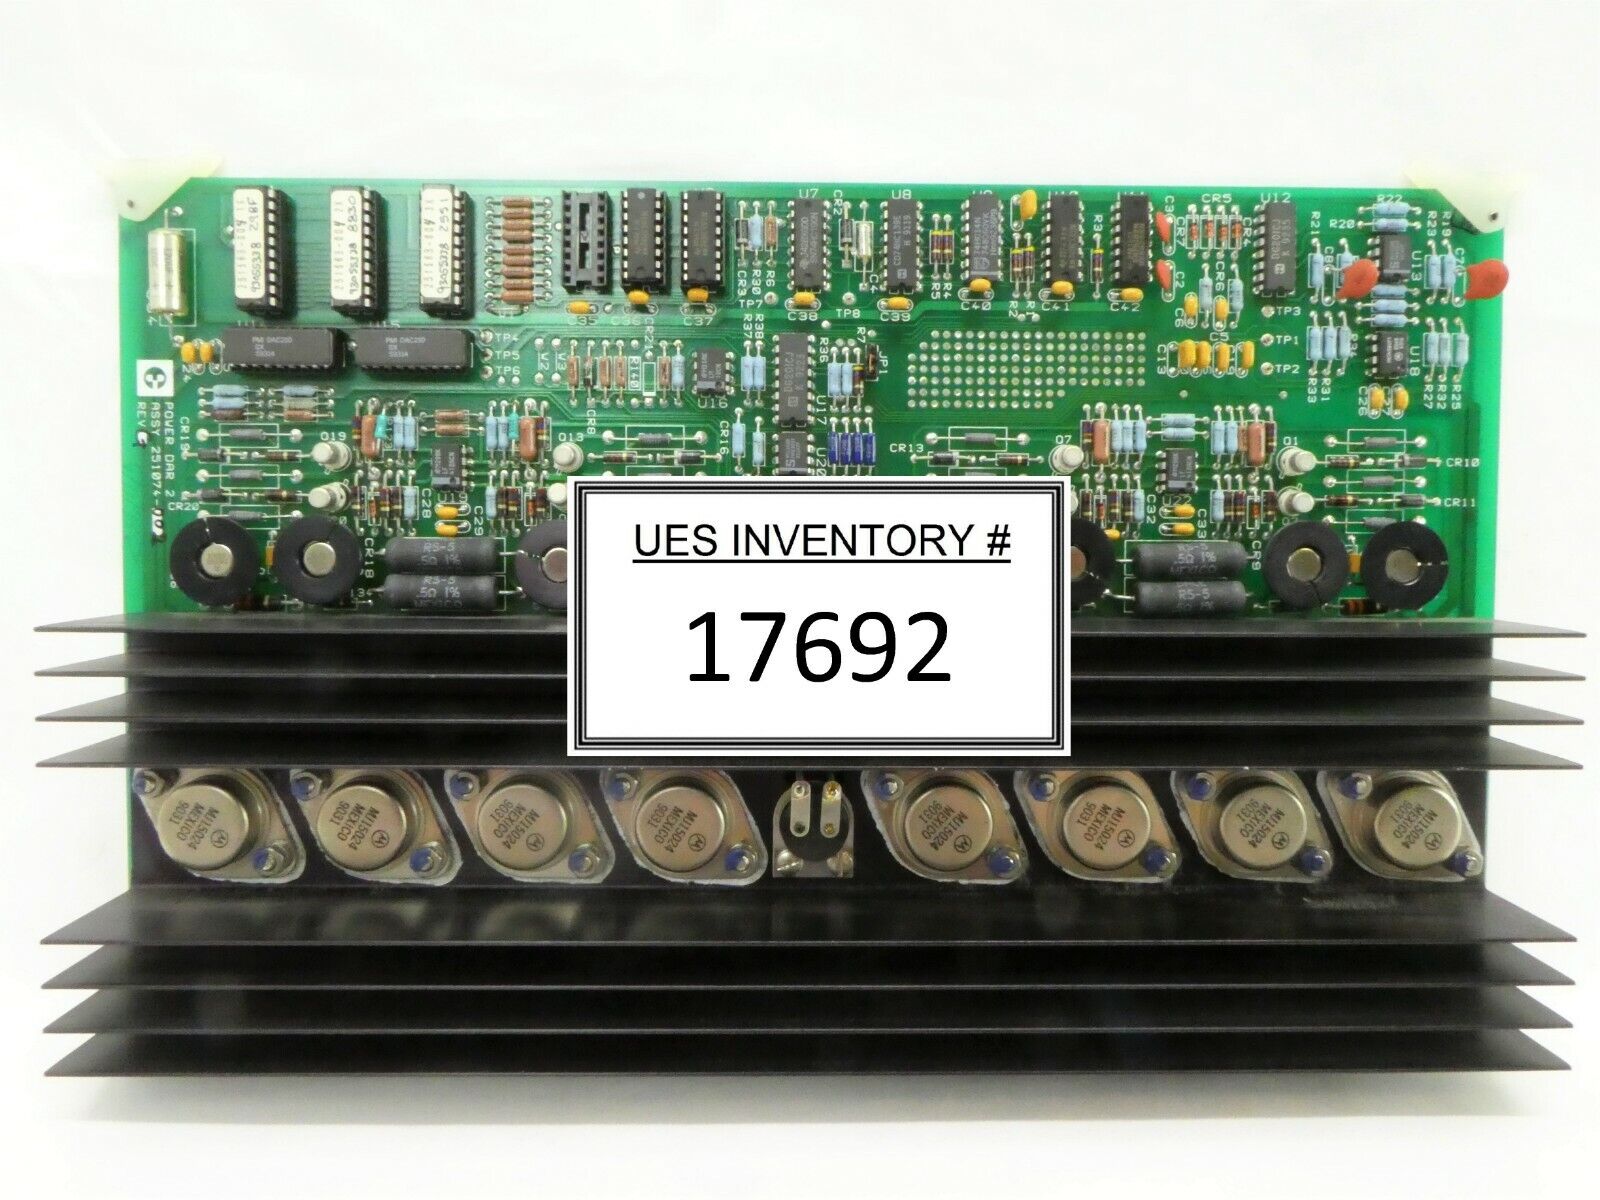 Electroglas 251074-002 Power DAR 2 Card PCB Rev. G 4085x Horizon PSM Spare